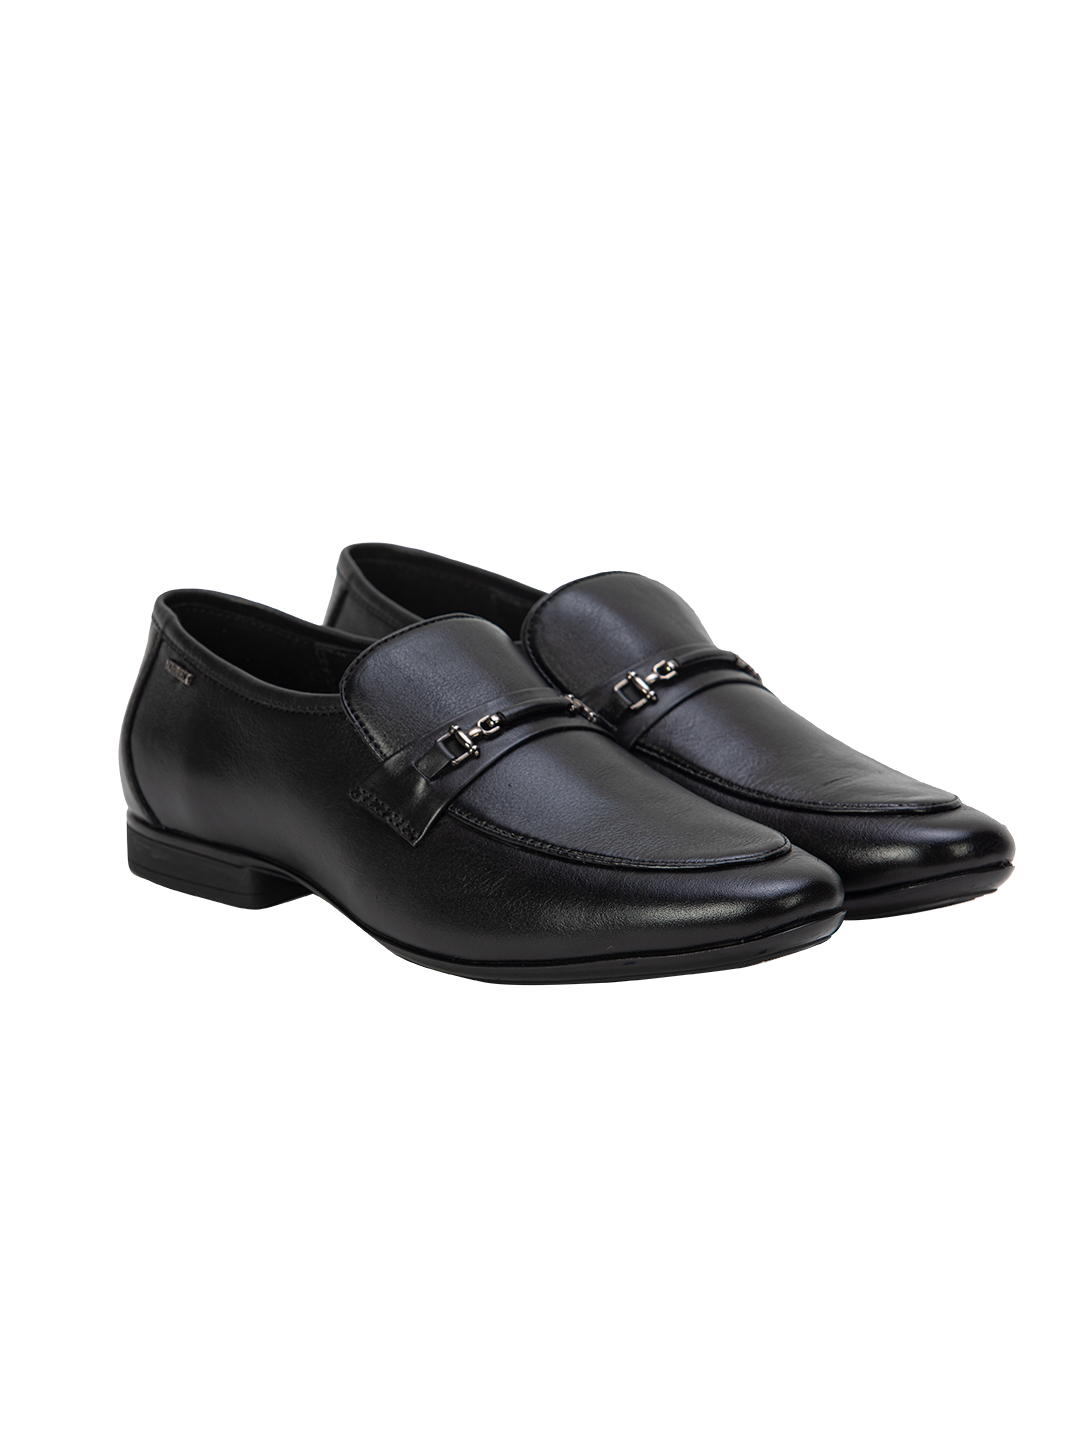 Buy Von Wellx Germany Comfort Black Glib Shoes Online in Kolkata